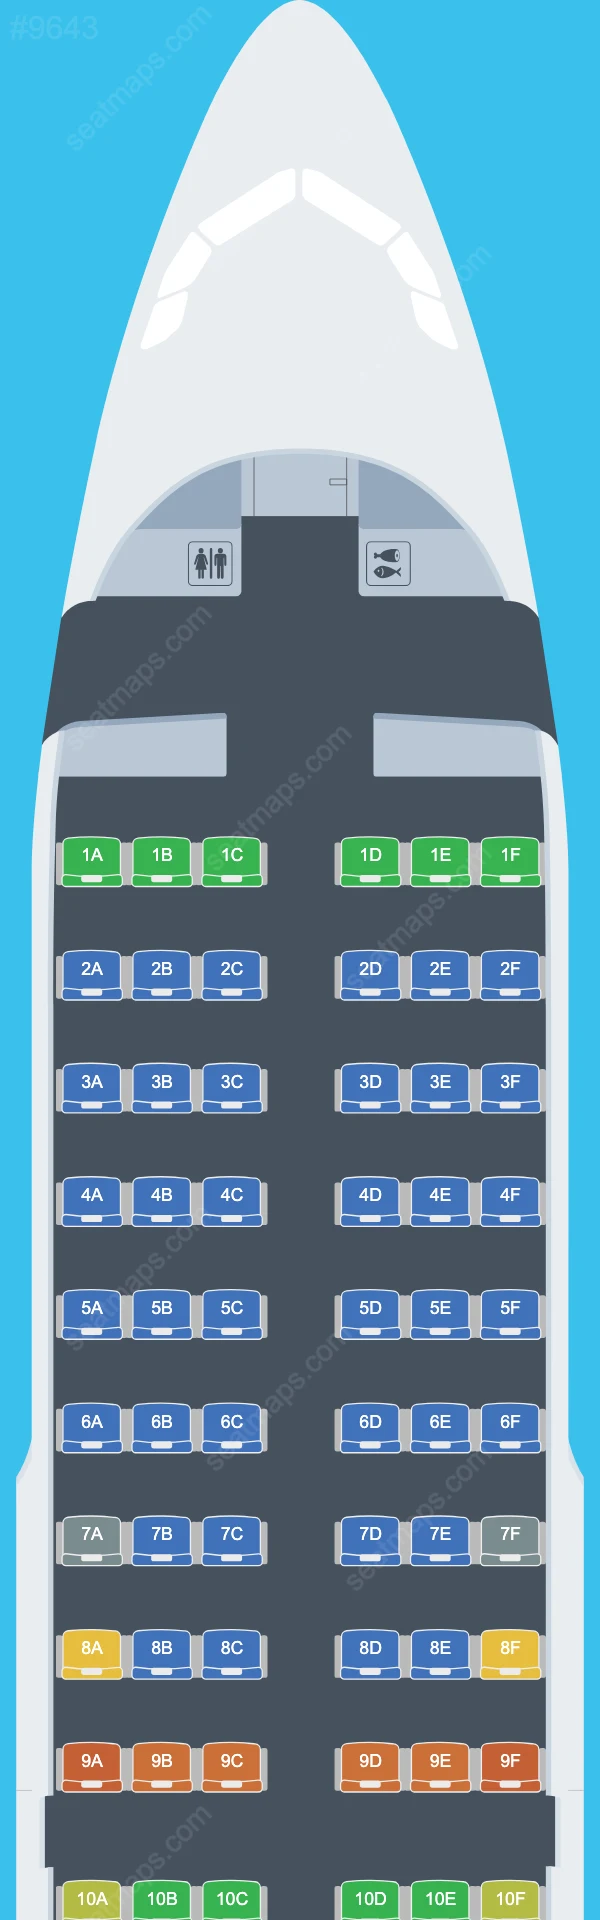 Схема салона ITA Airways в самолете Airbus A319 A319-100 V.1